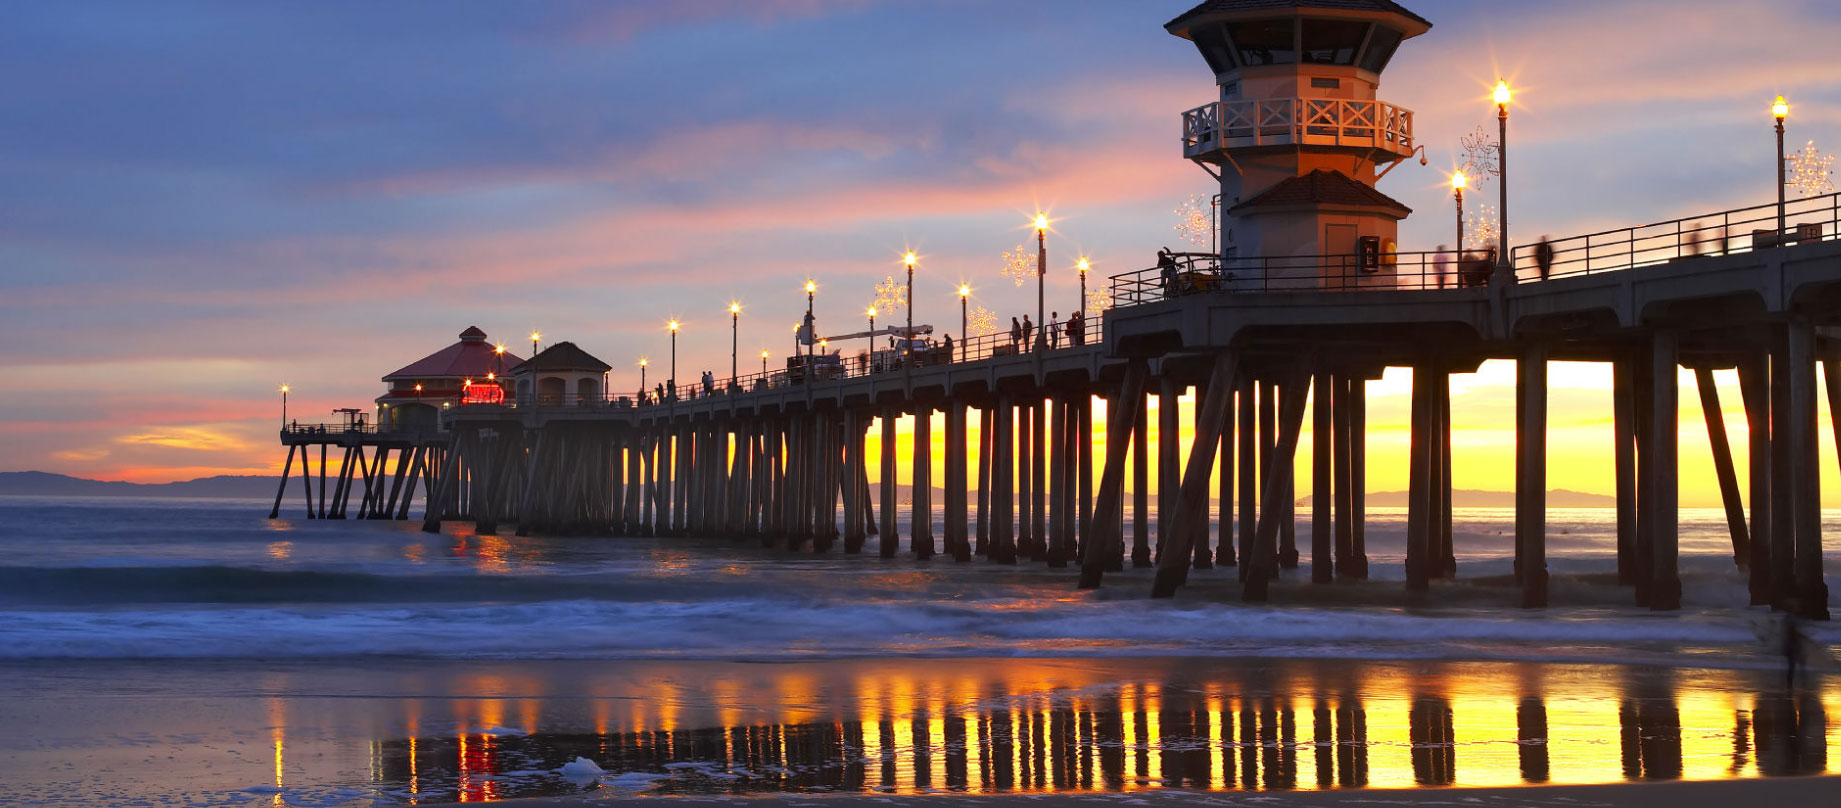 21 Best Things to Do in Huntington Beach, California